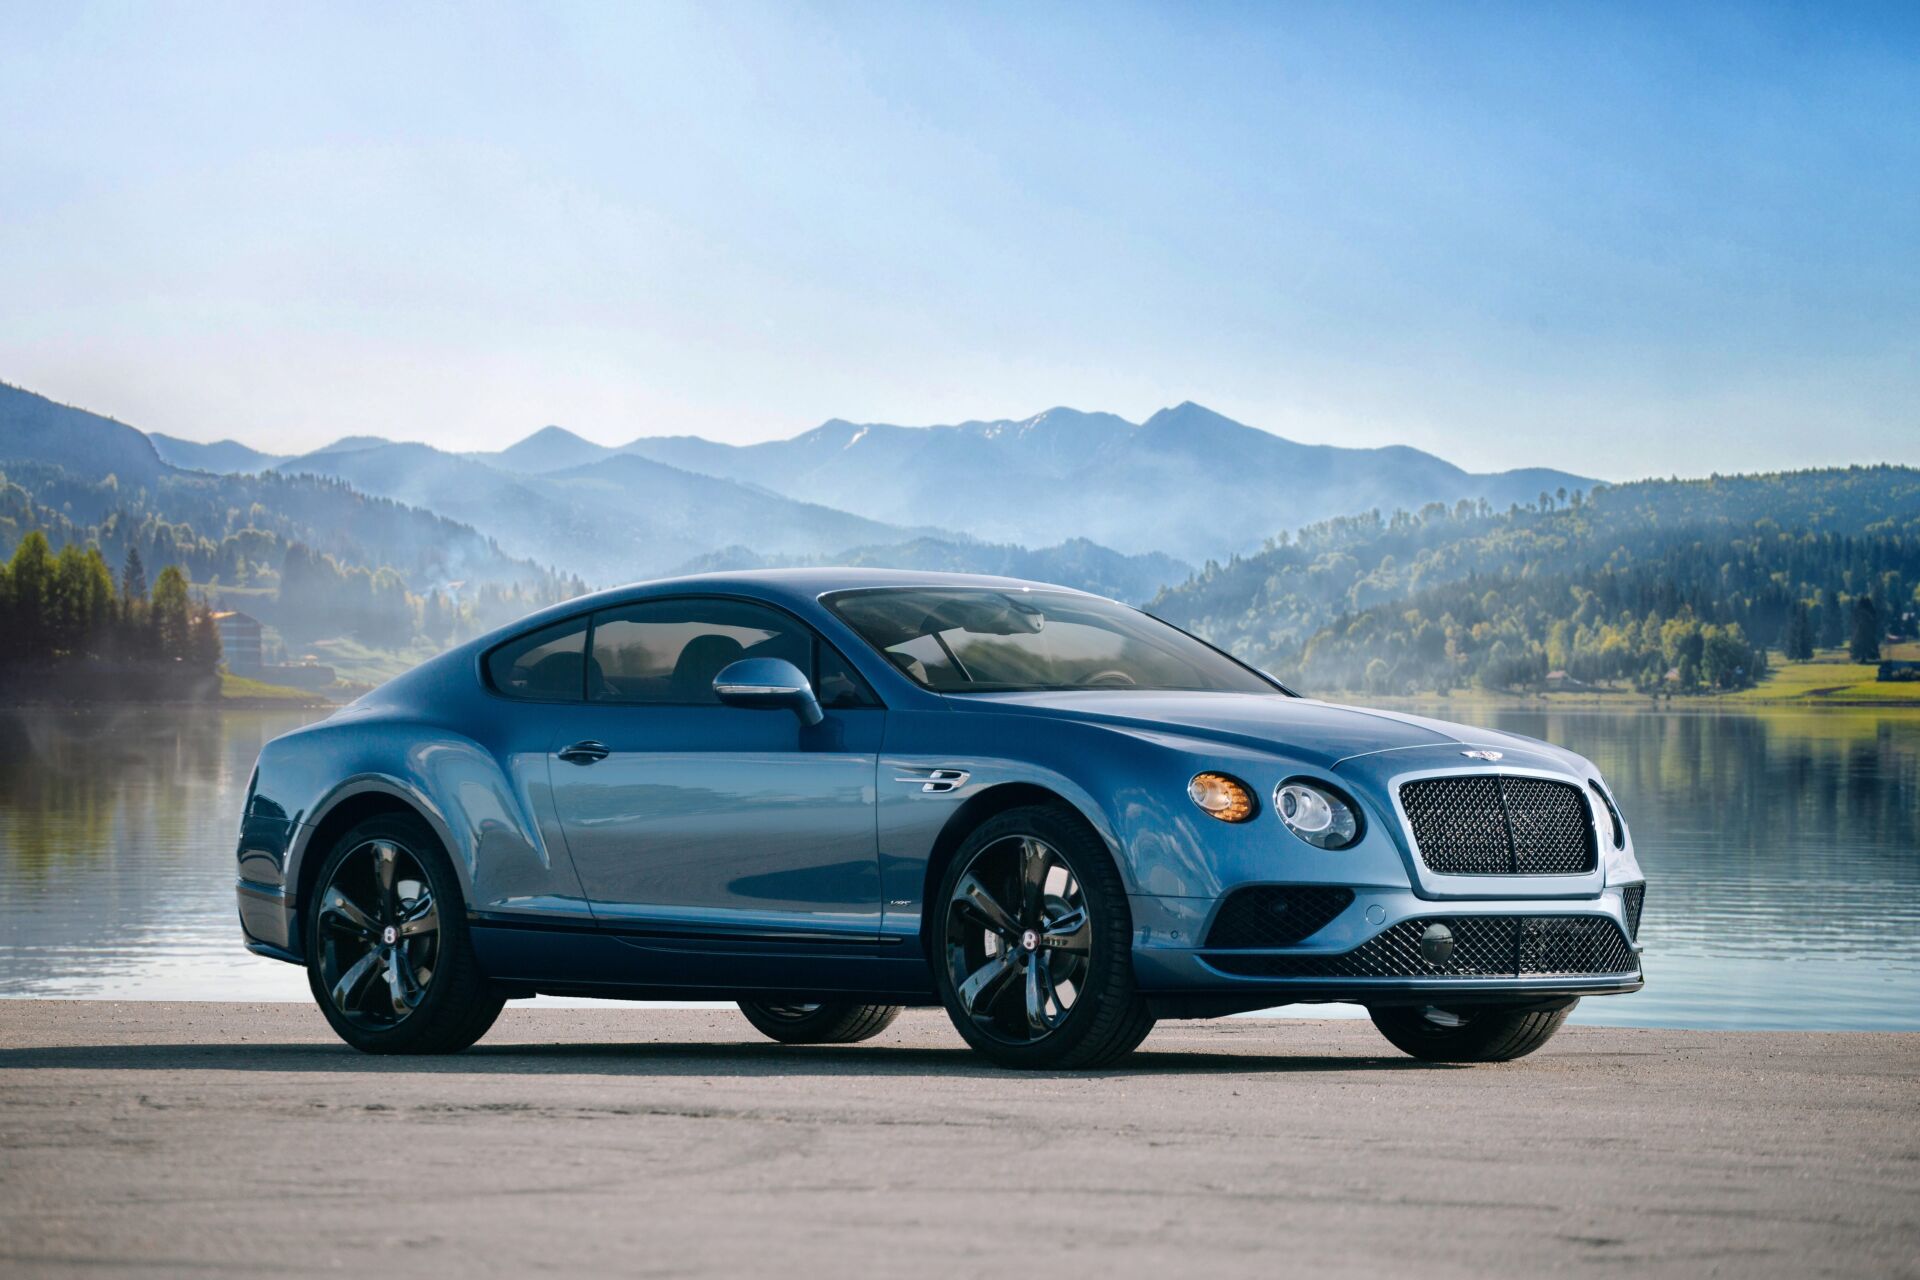 Bentley-Continental-GT-scaled.jpg